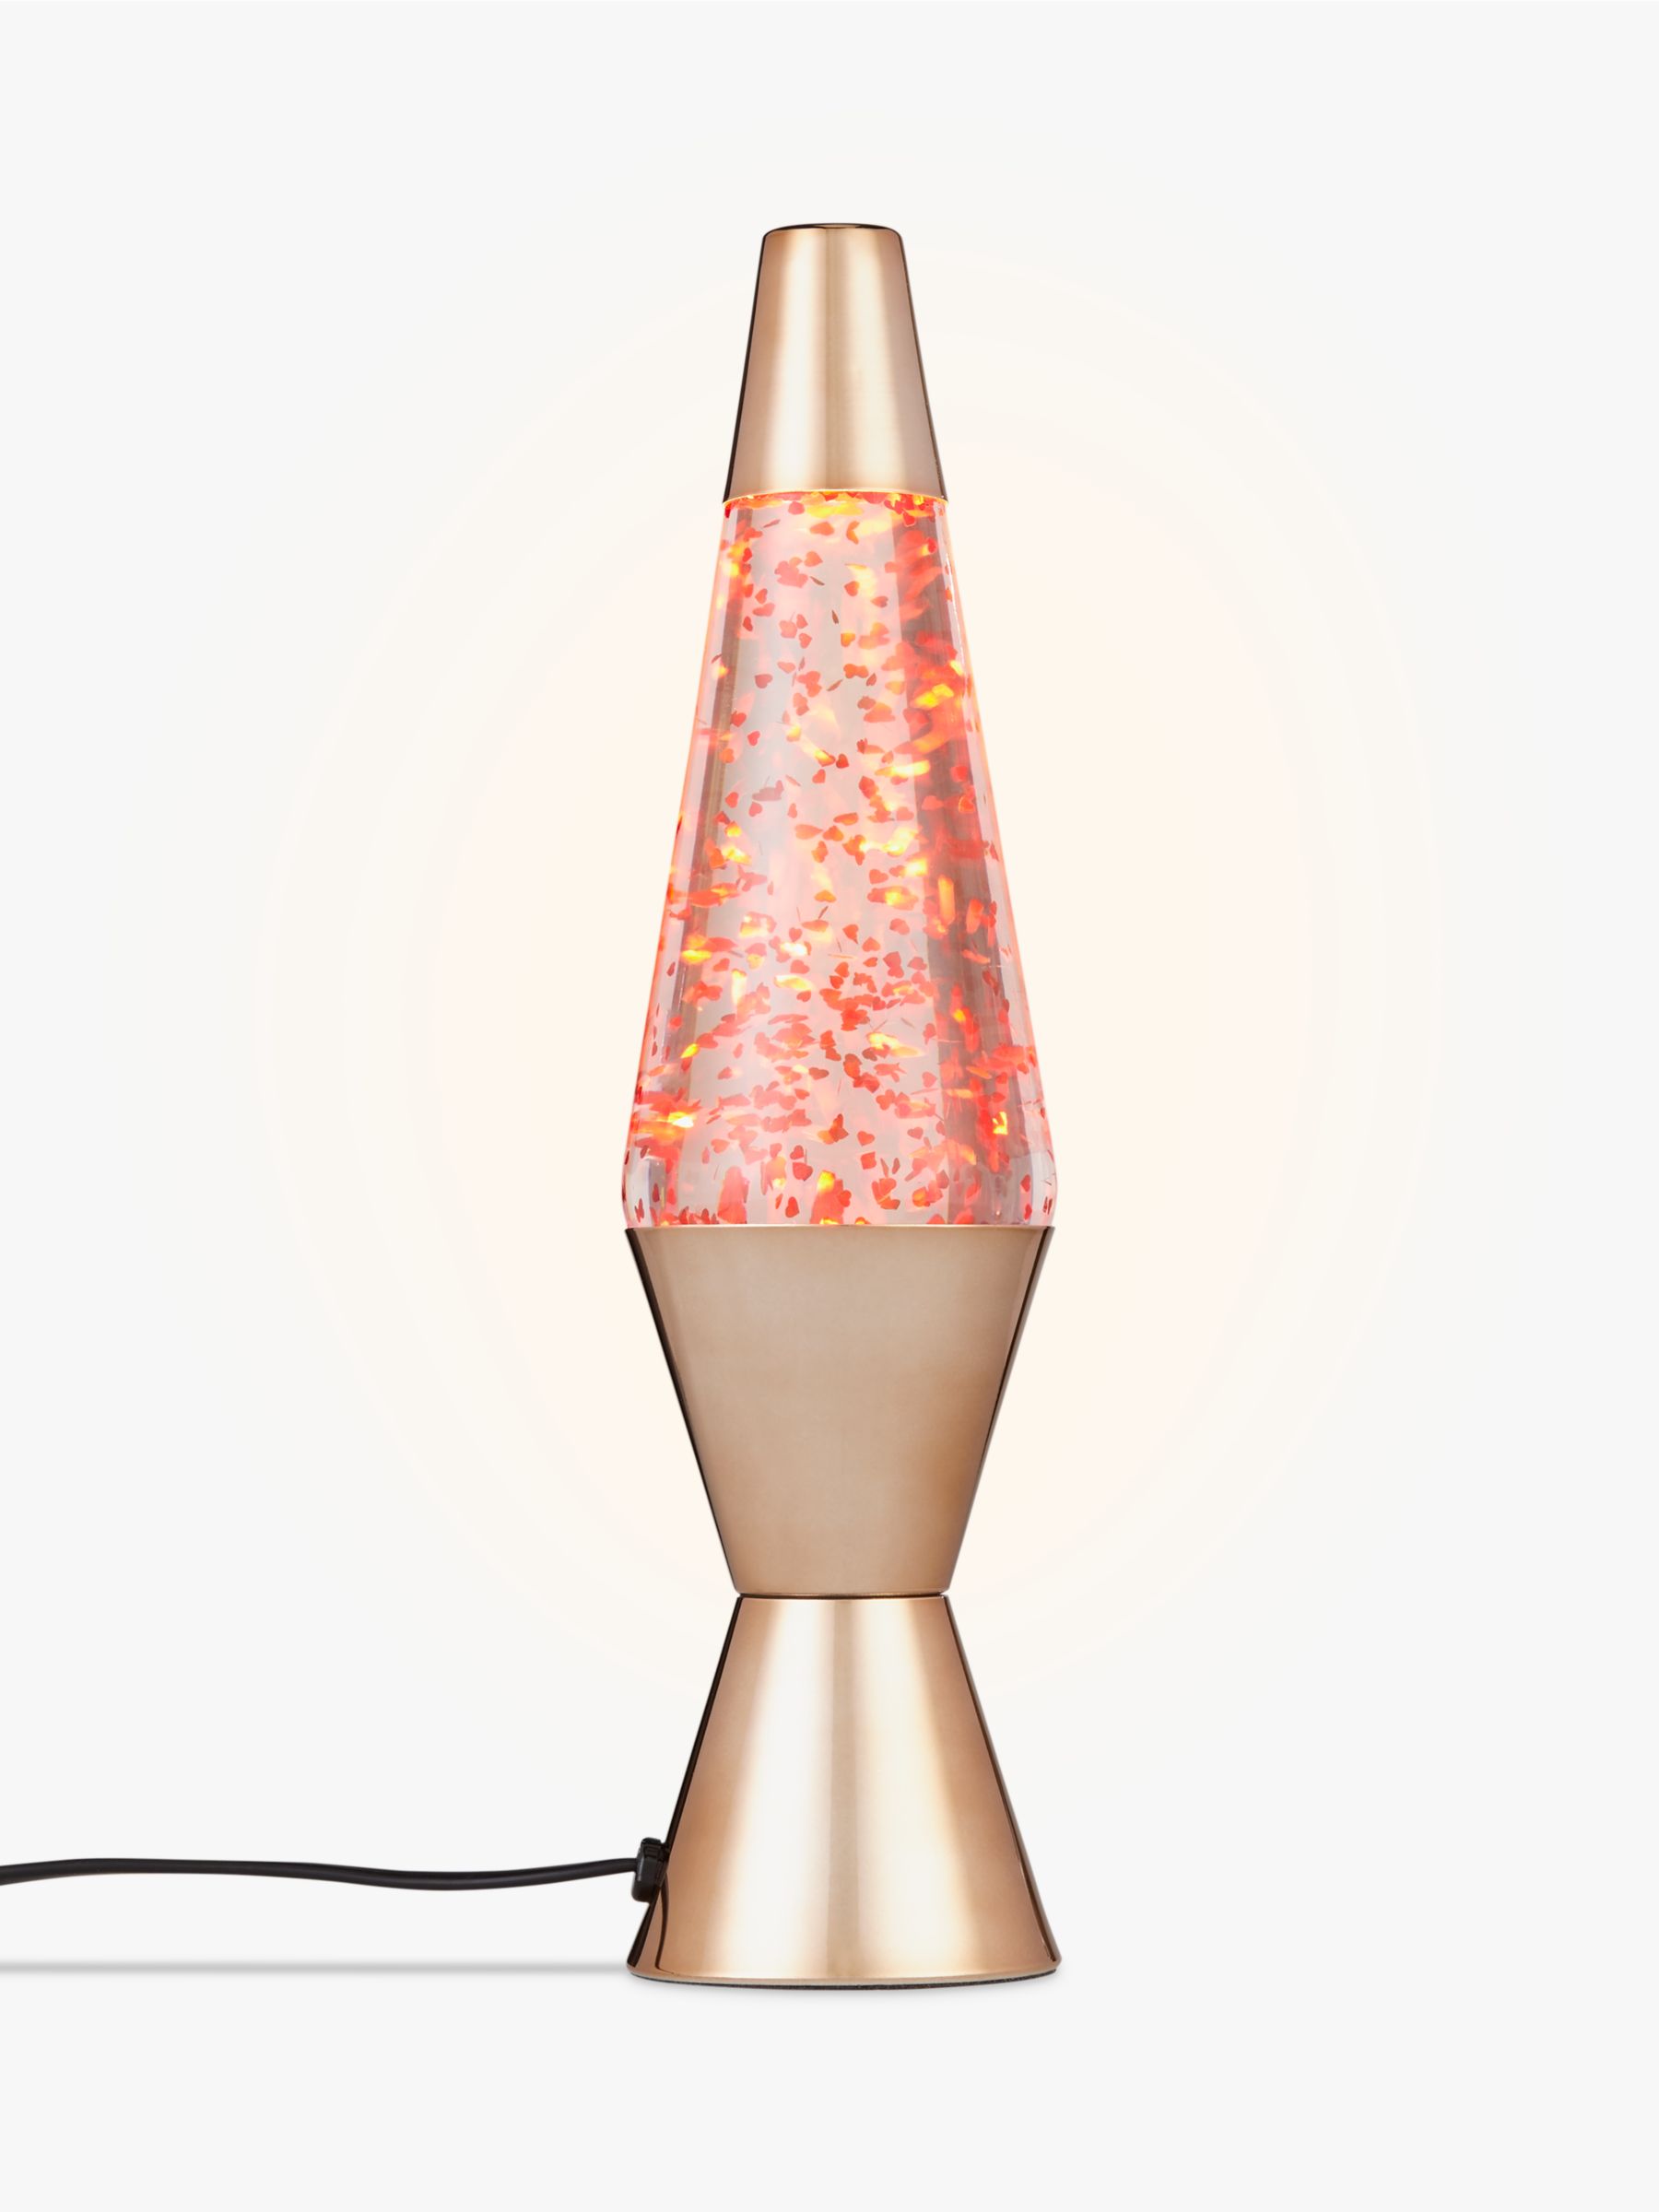 rose gold led lamp